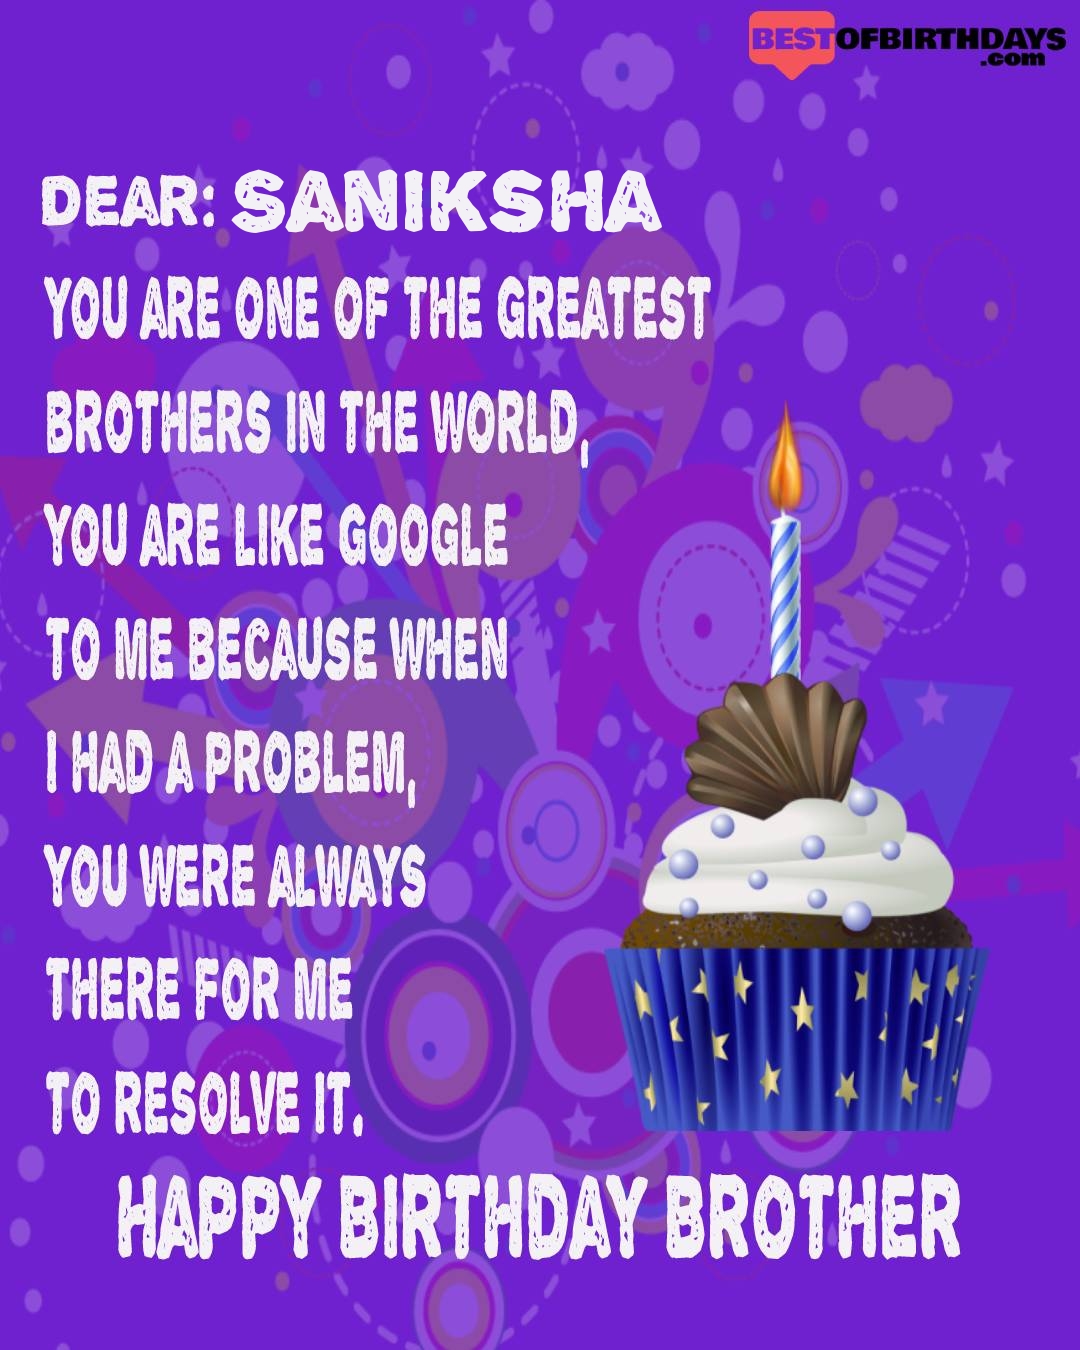 Happy birthday saniksha bhai brother bro